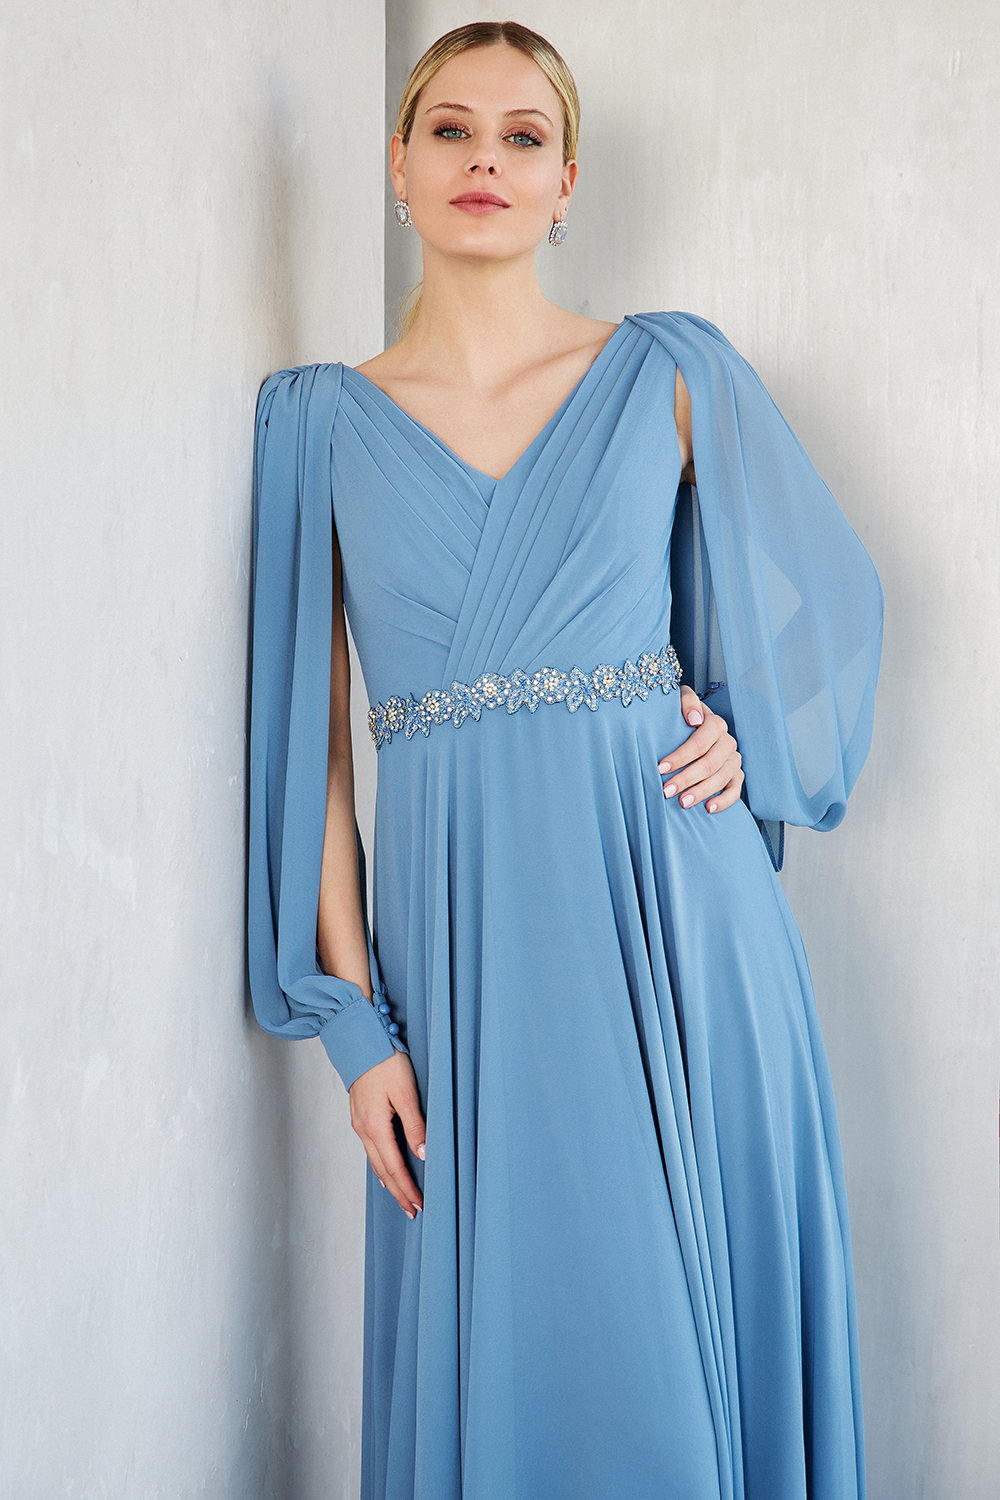 Классические платья / Long evening chiffon dress with beading at the waist and long sleeves